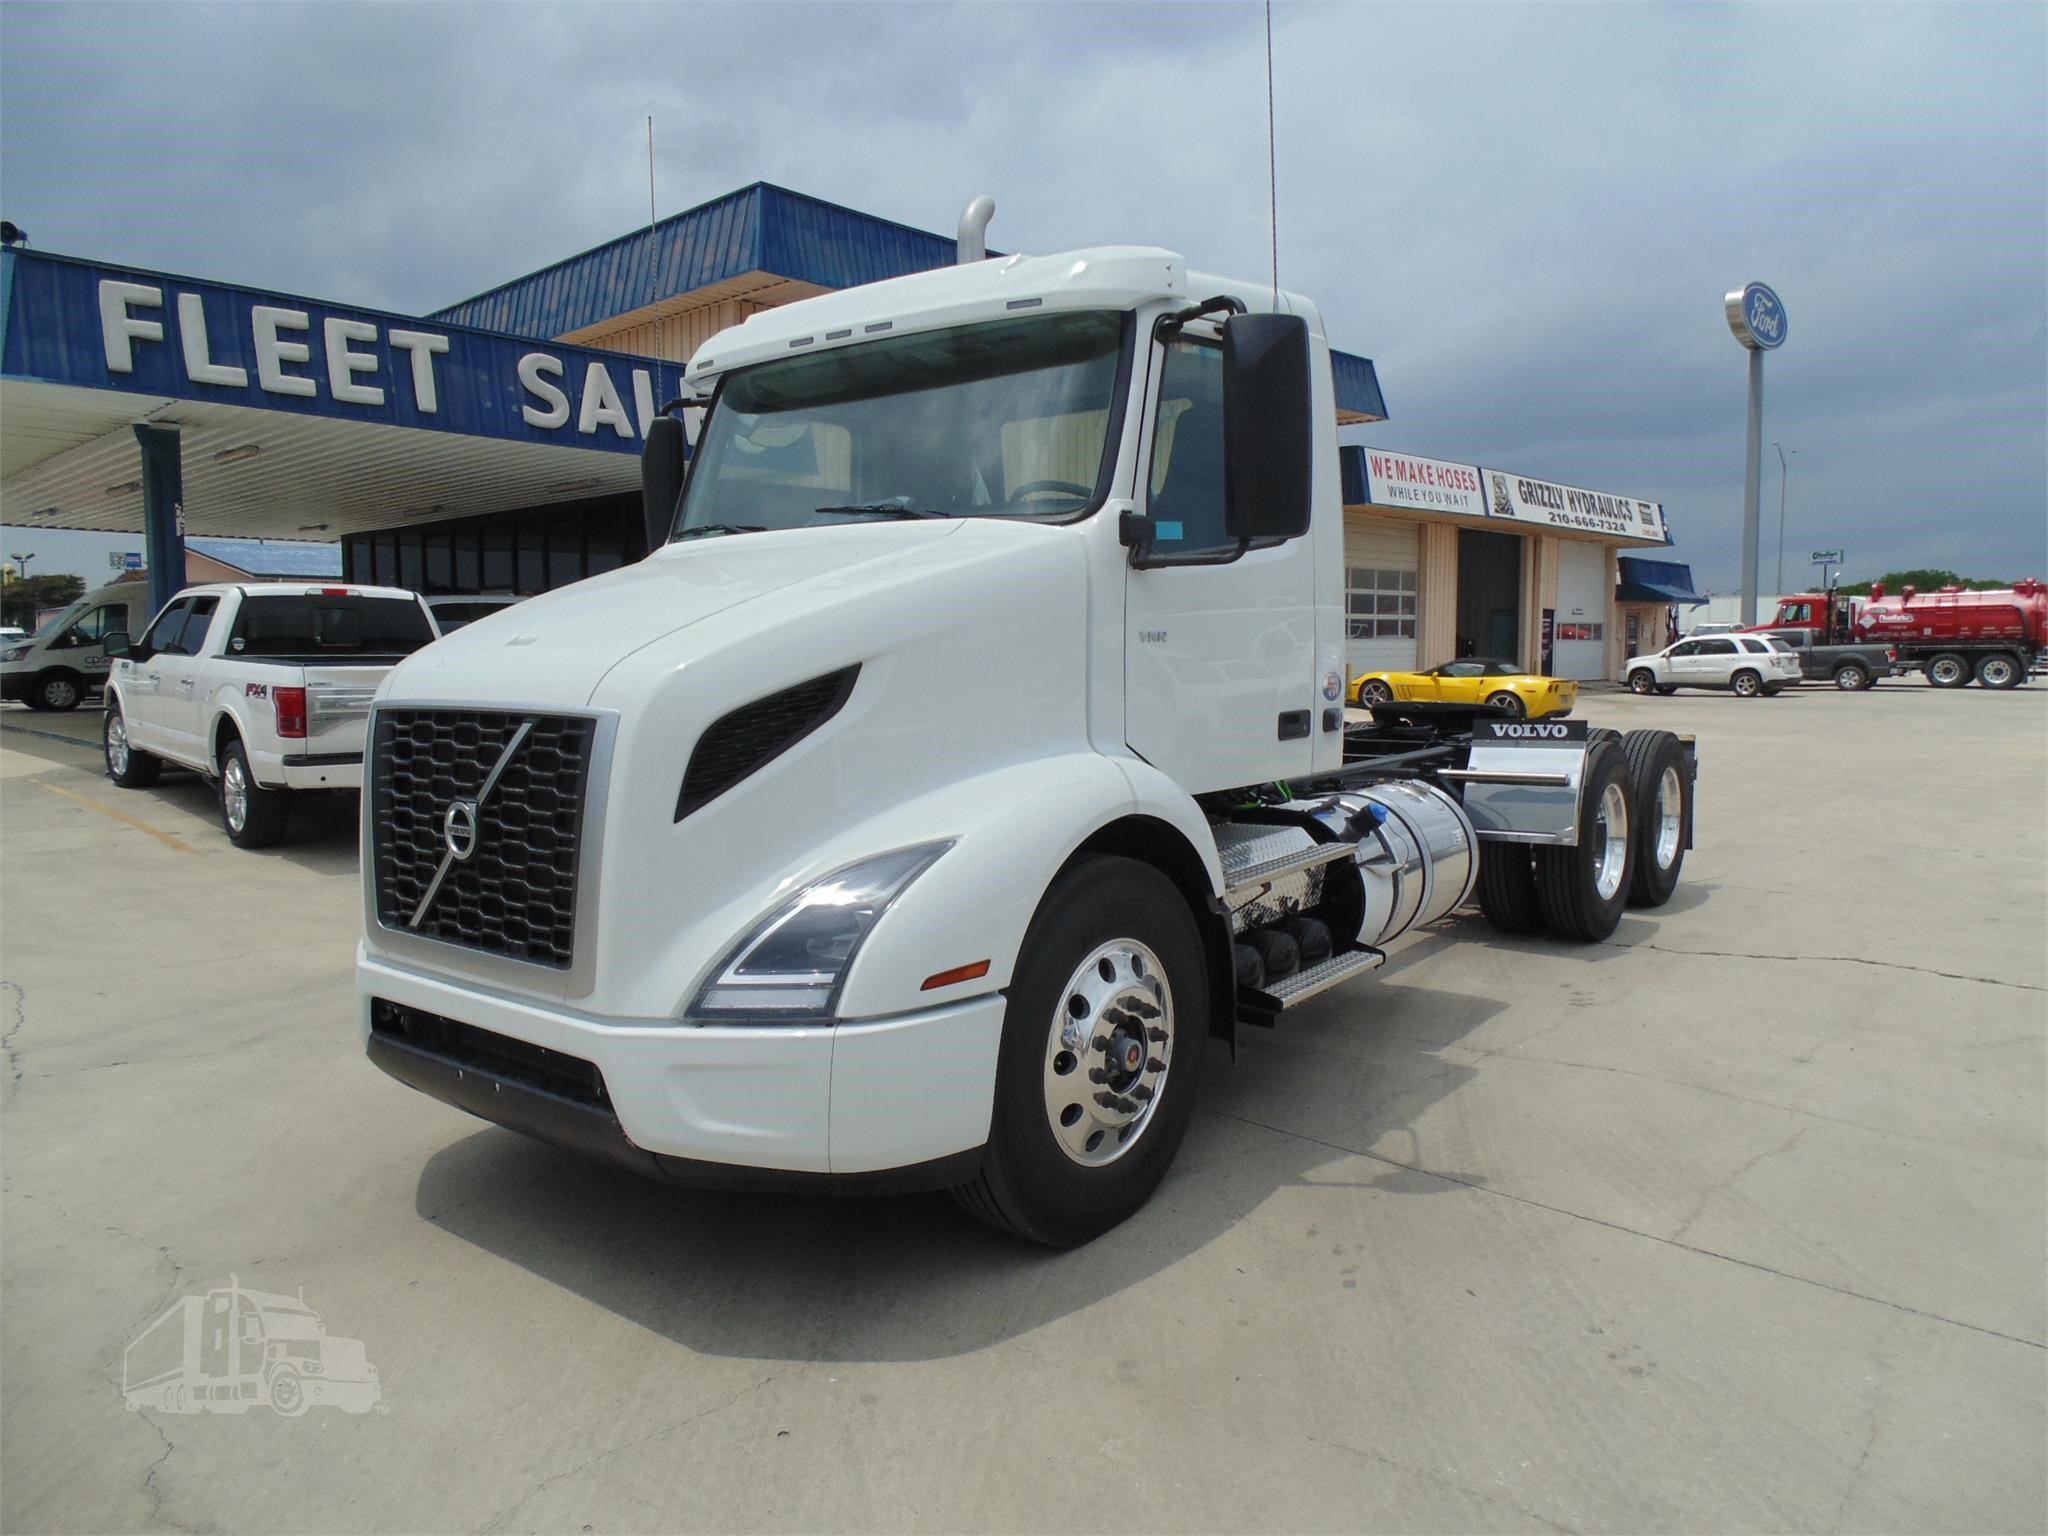 2019 VOLVO VNR64T300 For Sale In San Antonio, Texas | TruckPaper.com